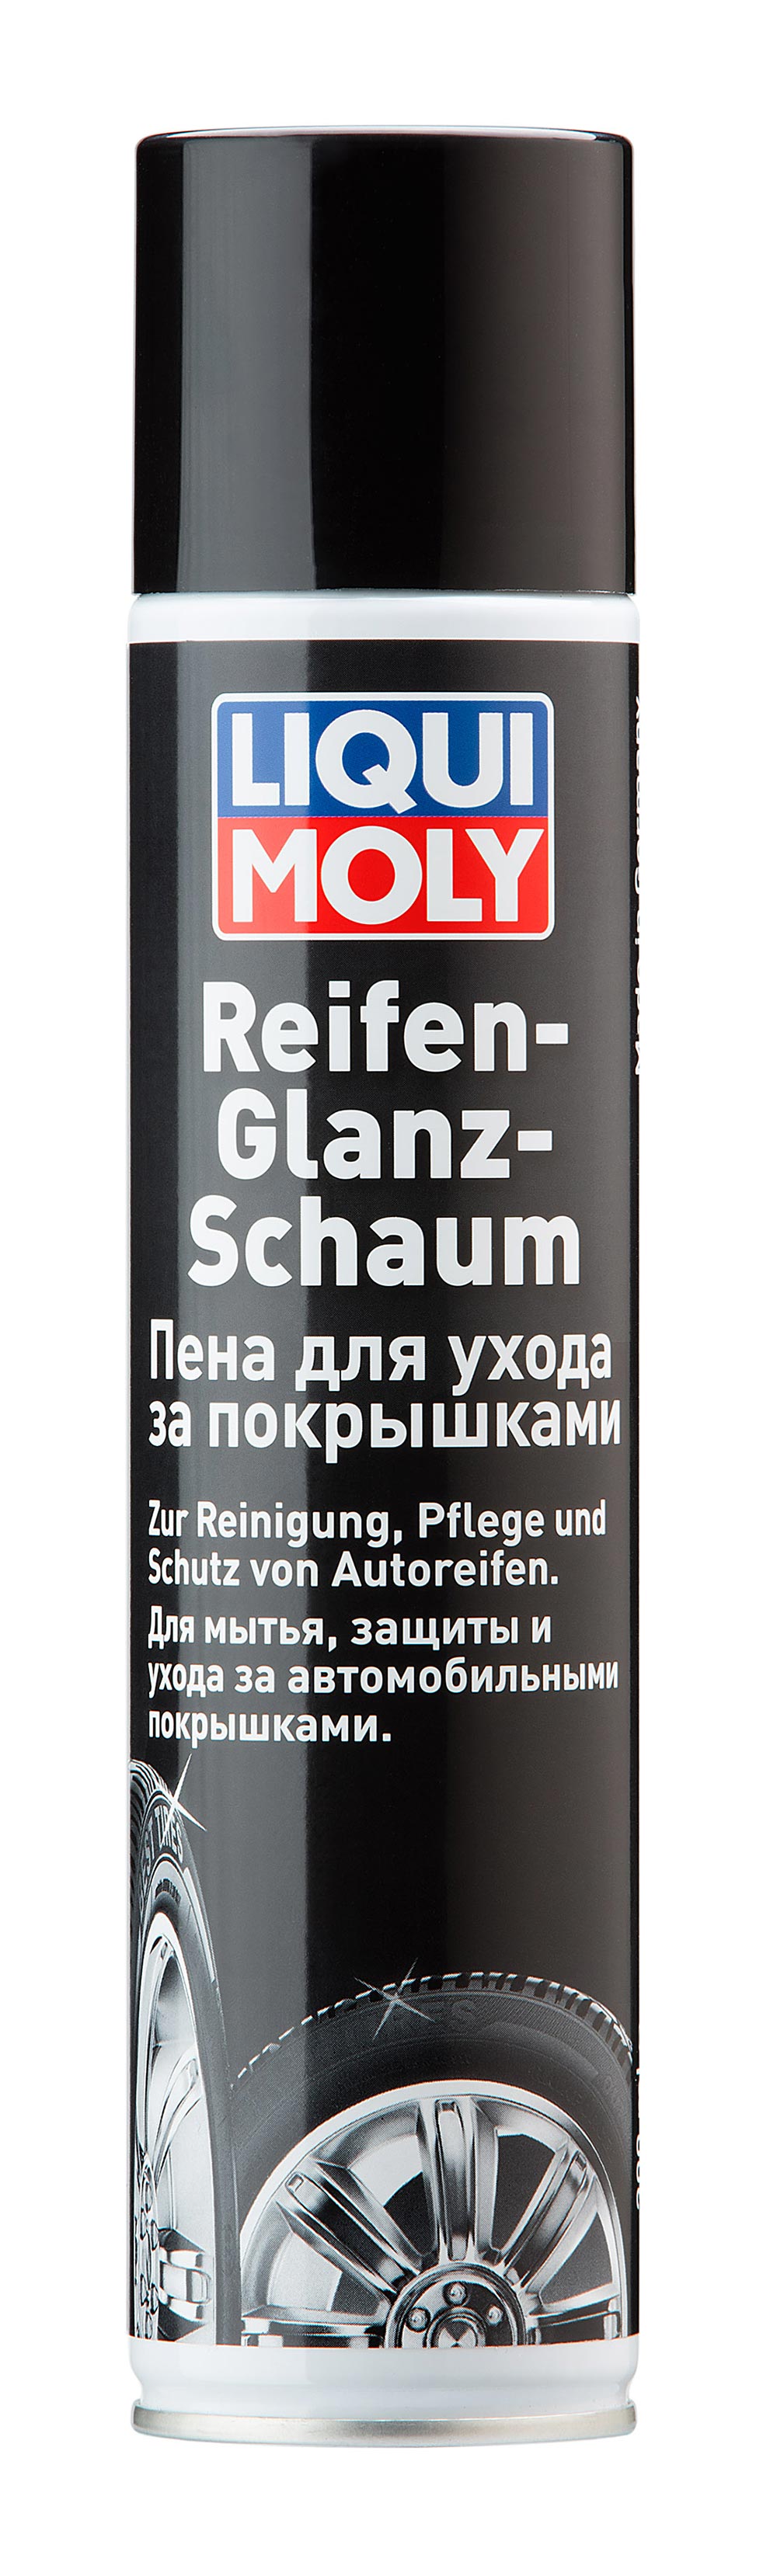 Пена для ухода за покрышками Reifen-Glanz-Schaum 0.300мл